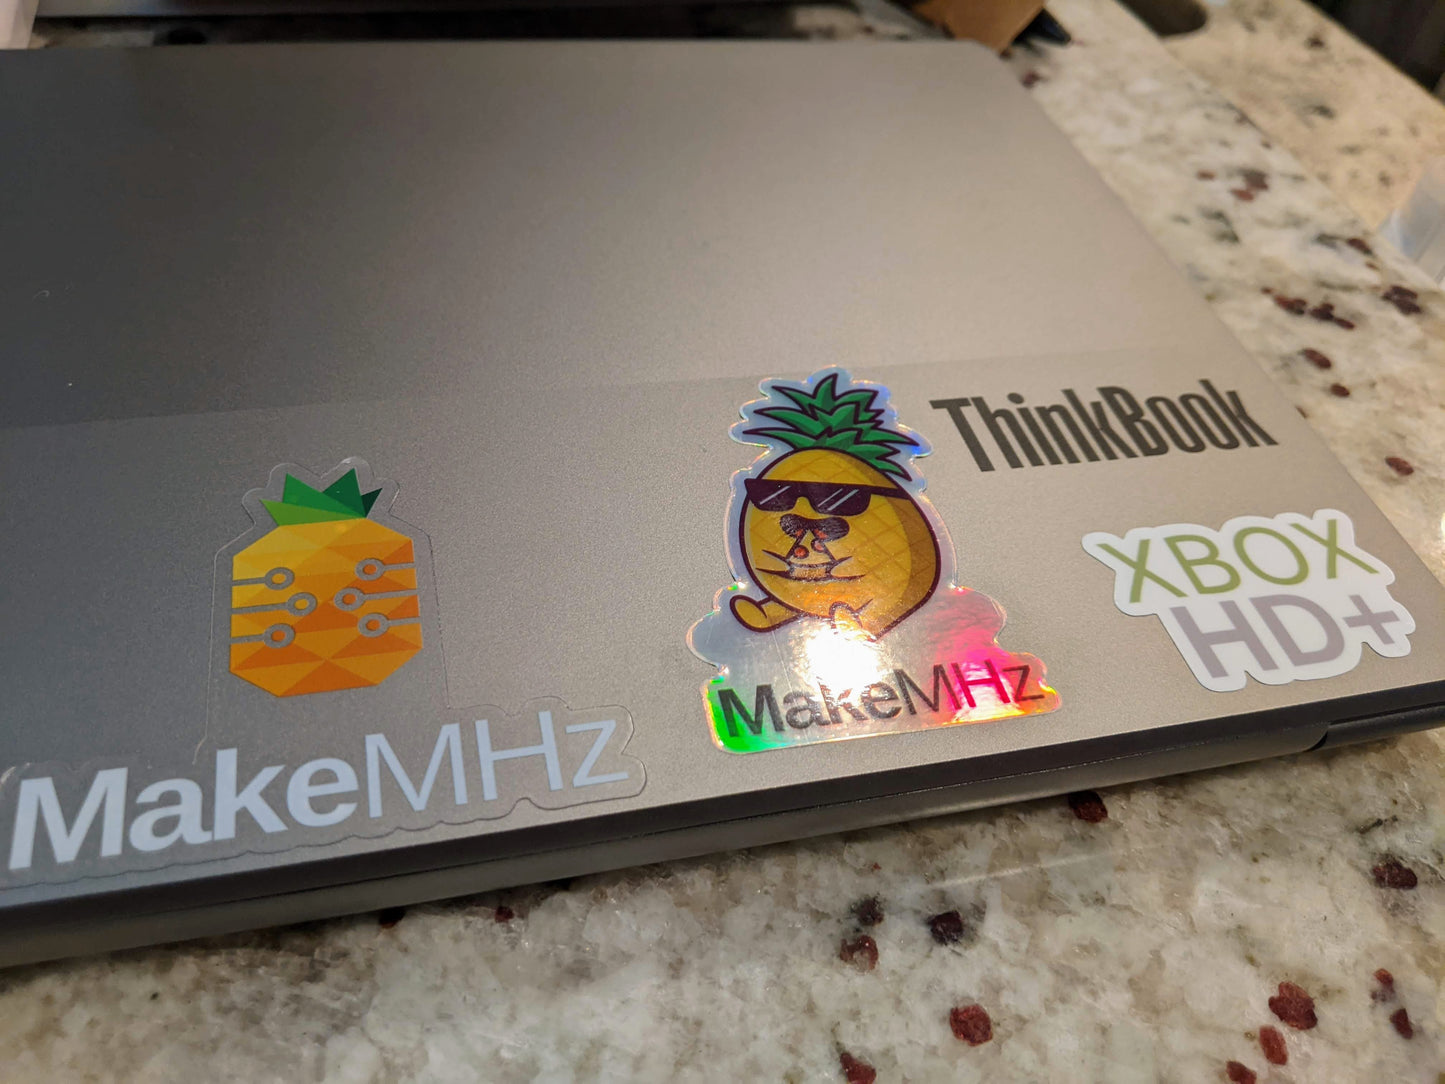 MakeMHz Sticker Pack #1